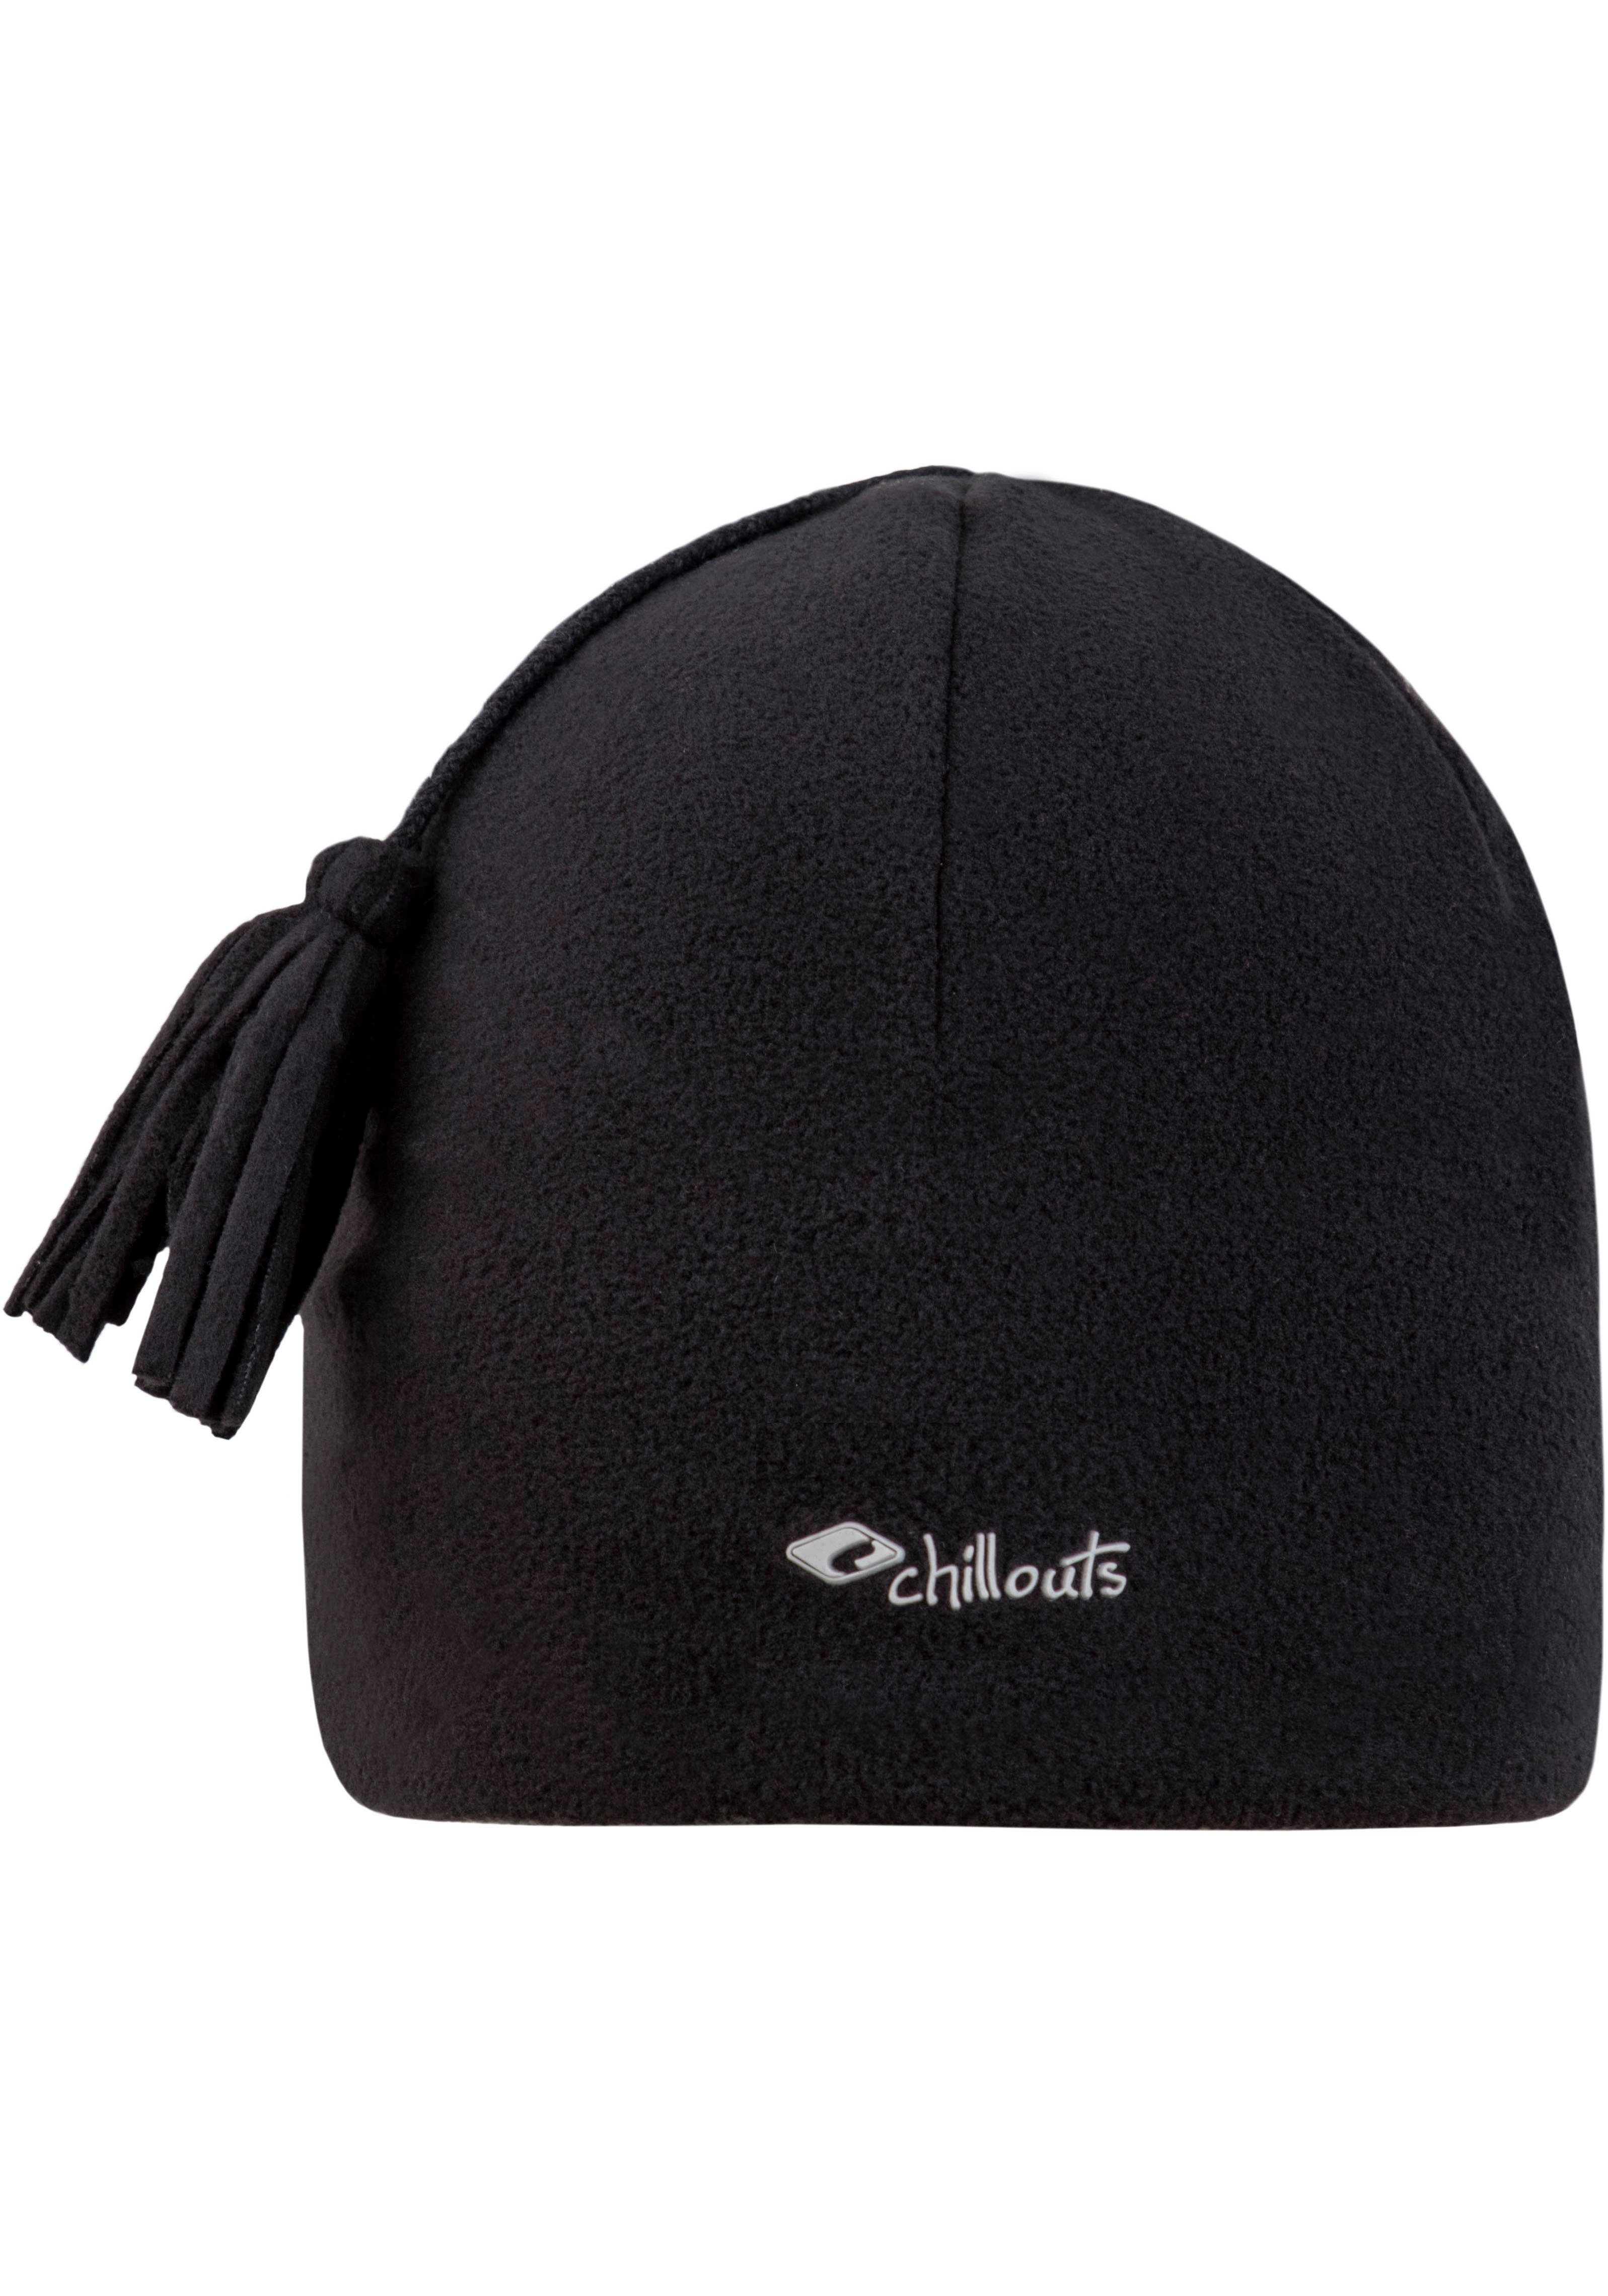 chillouts Fleecemütze Freeze Fleece Pom Hat black | Fleecemützen